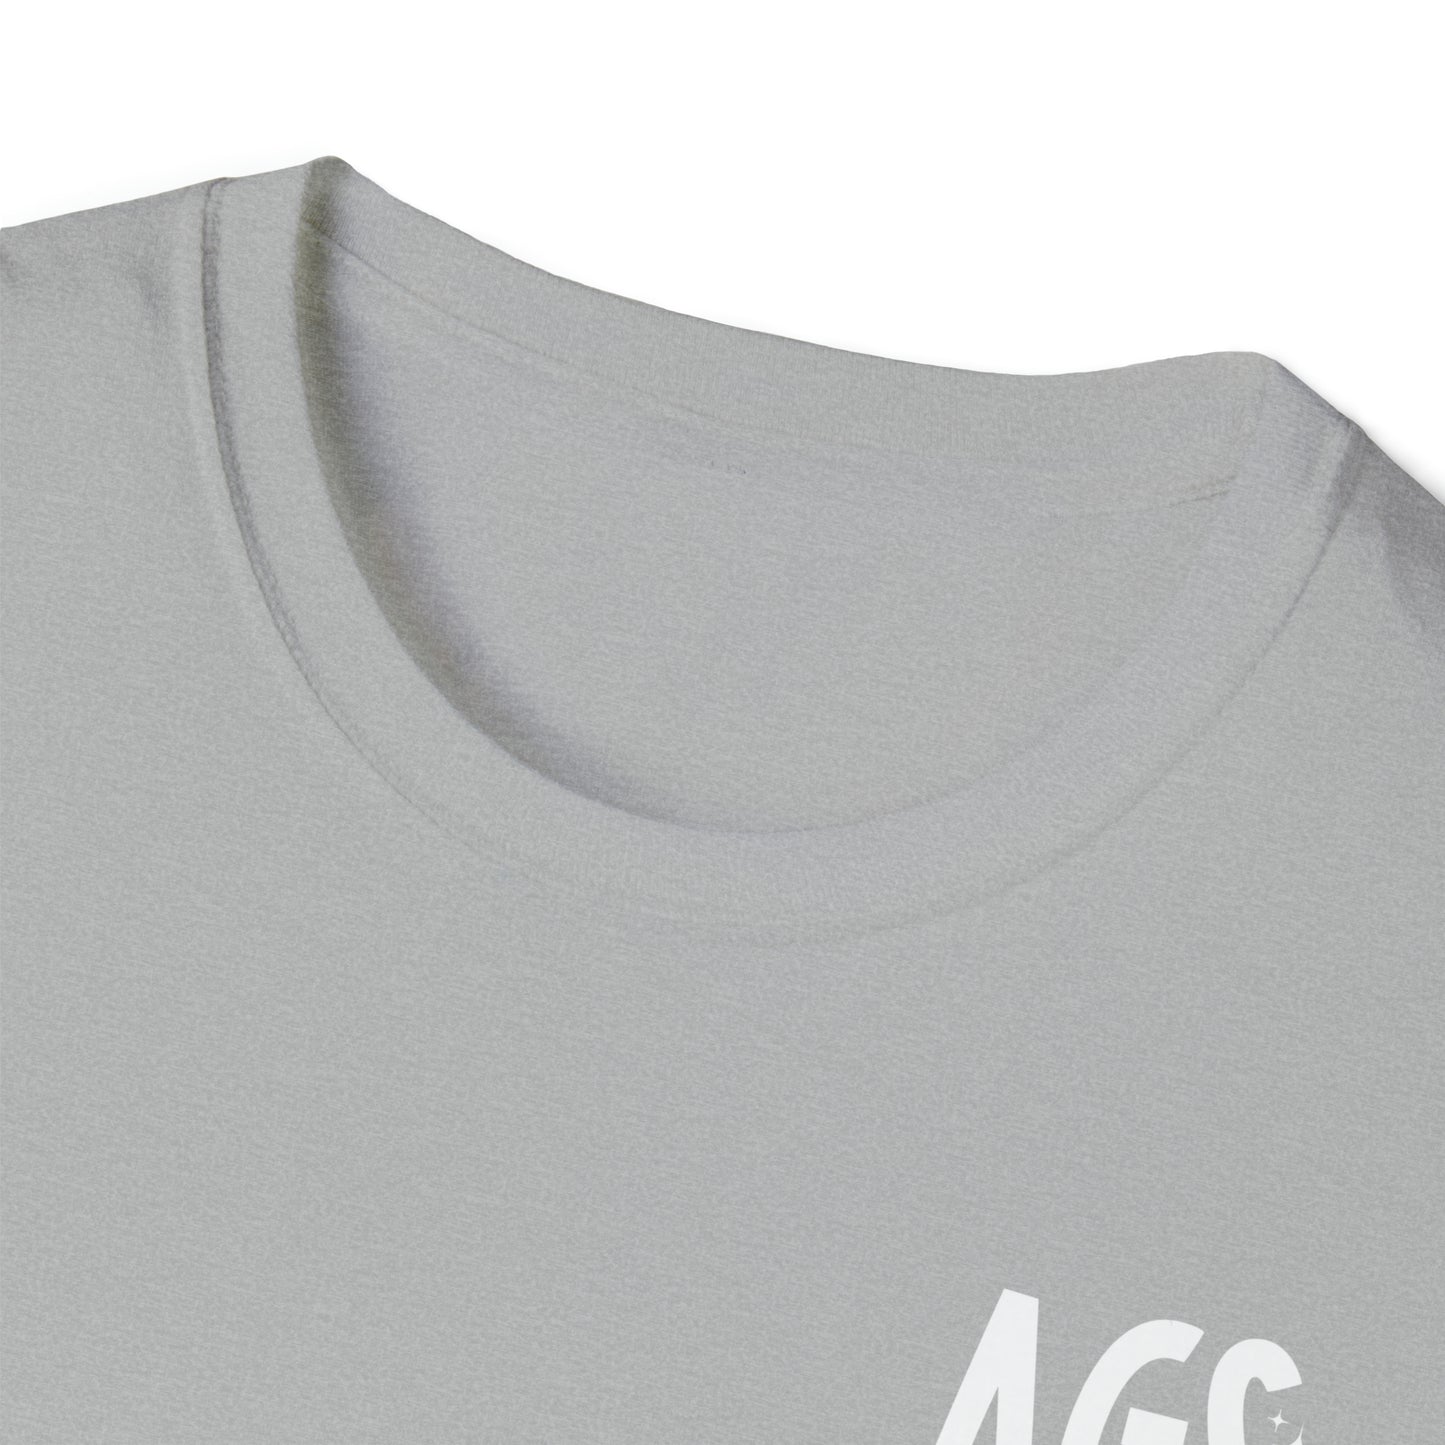 AGS White Logo, front/back, Unisex Gildan 64000 Softstyle T-Shirt